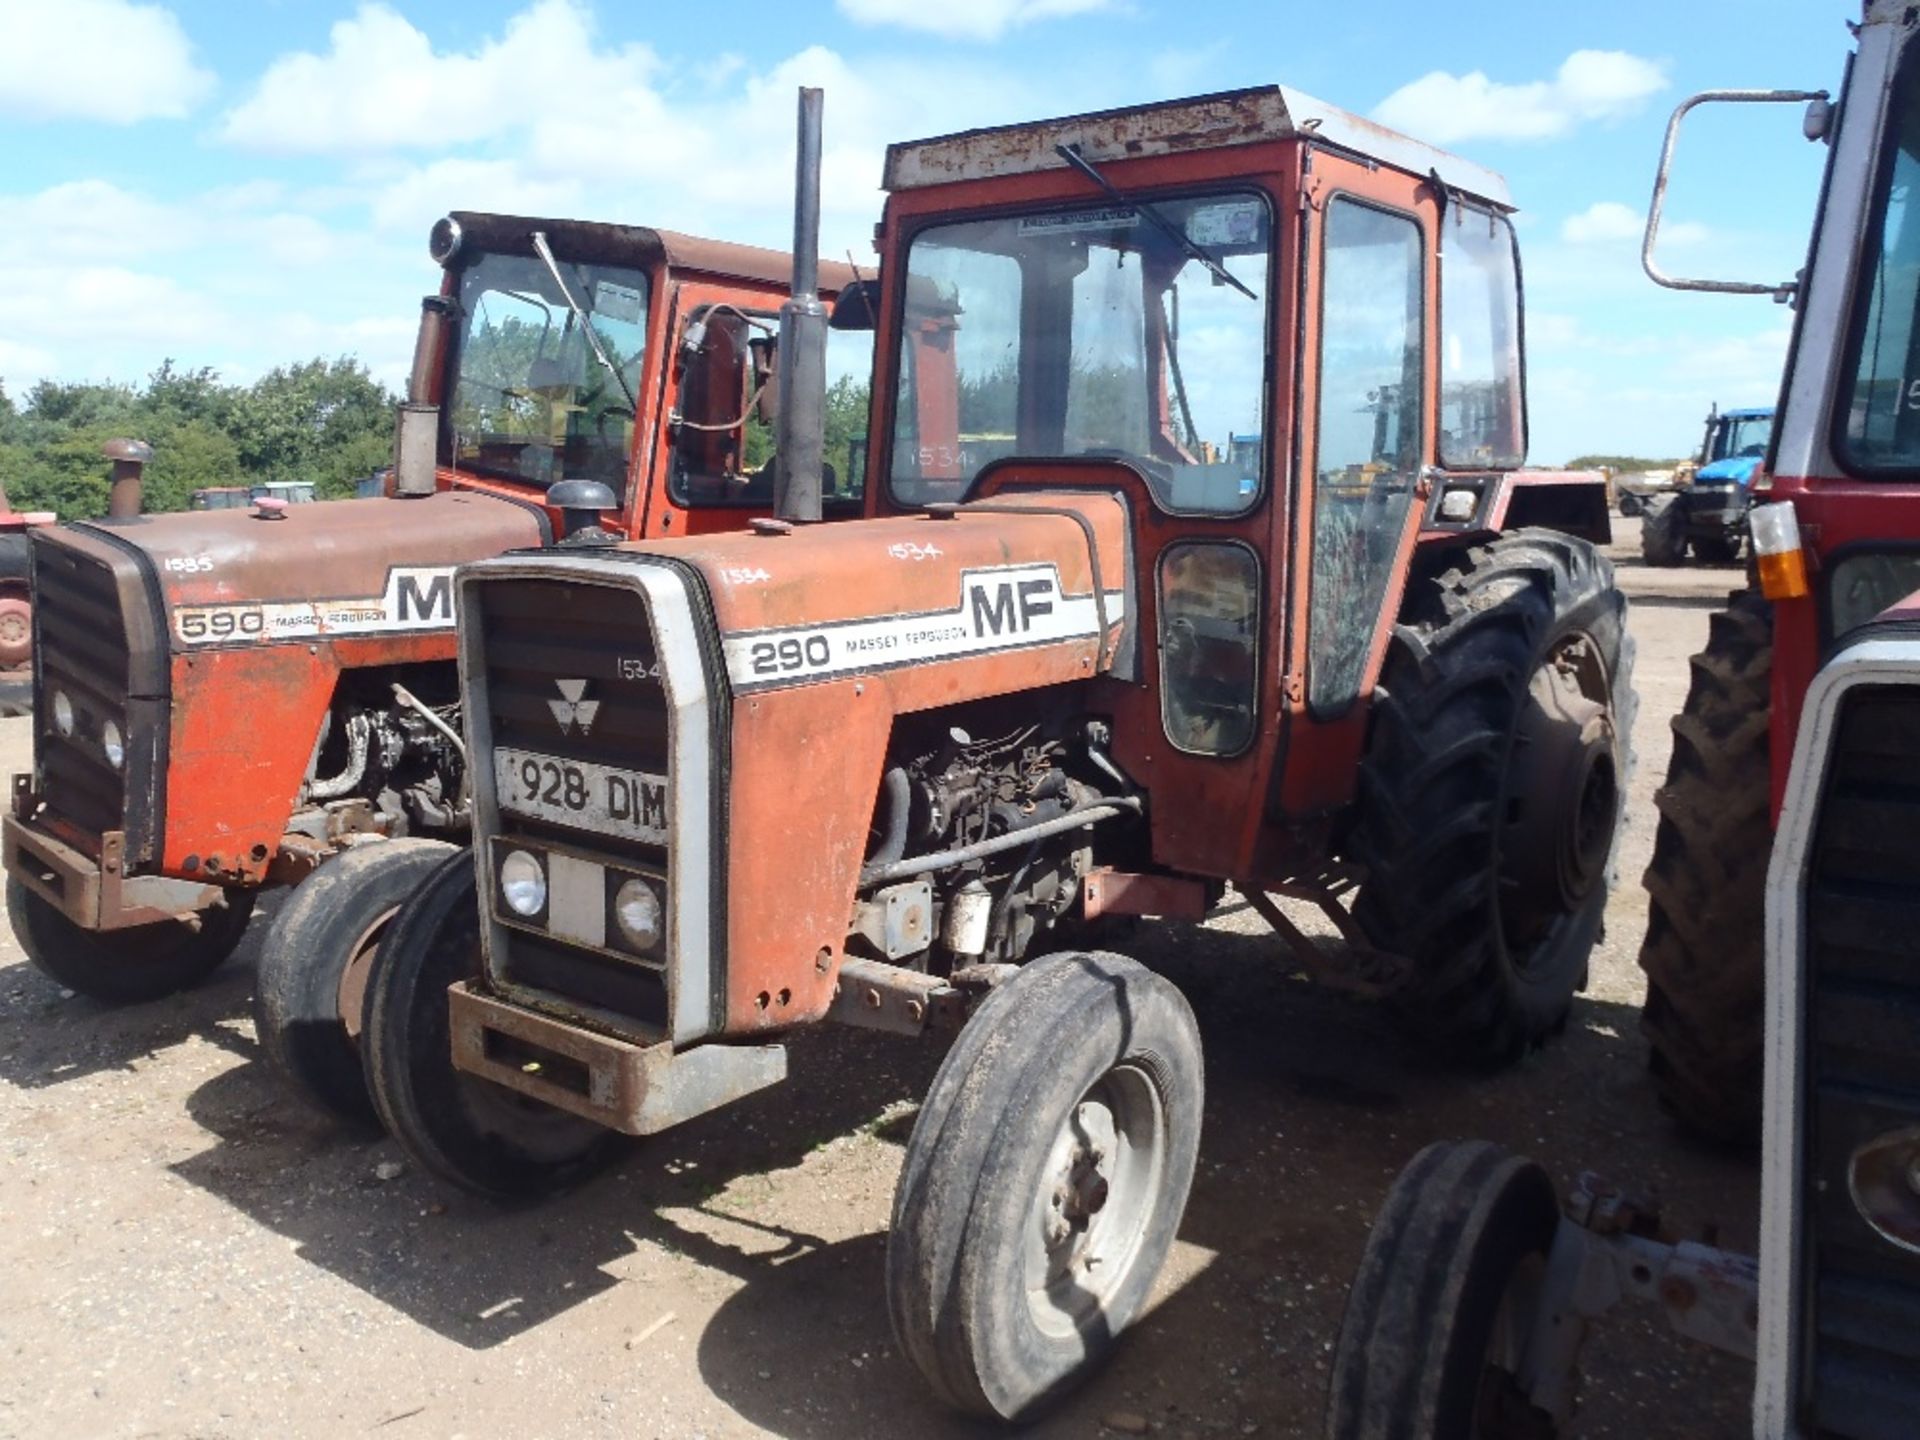 Massey Ferguson 290 Tractor. V5 will be supplied